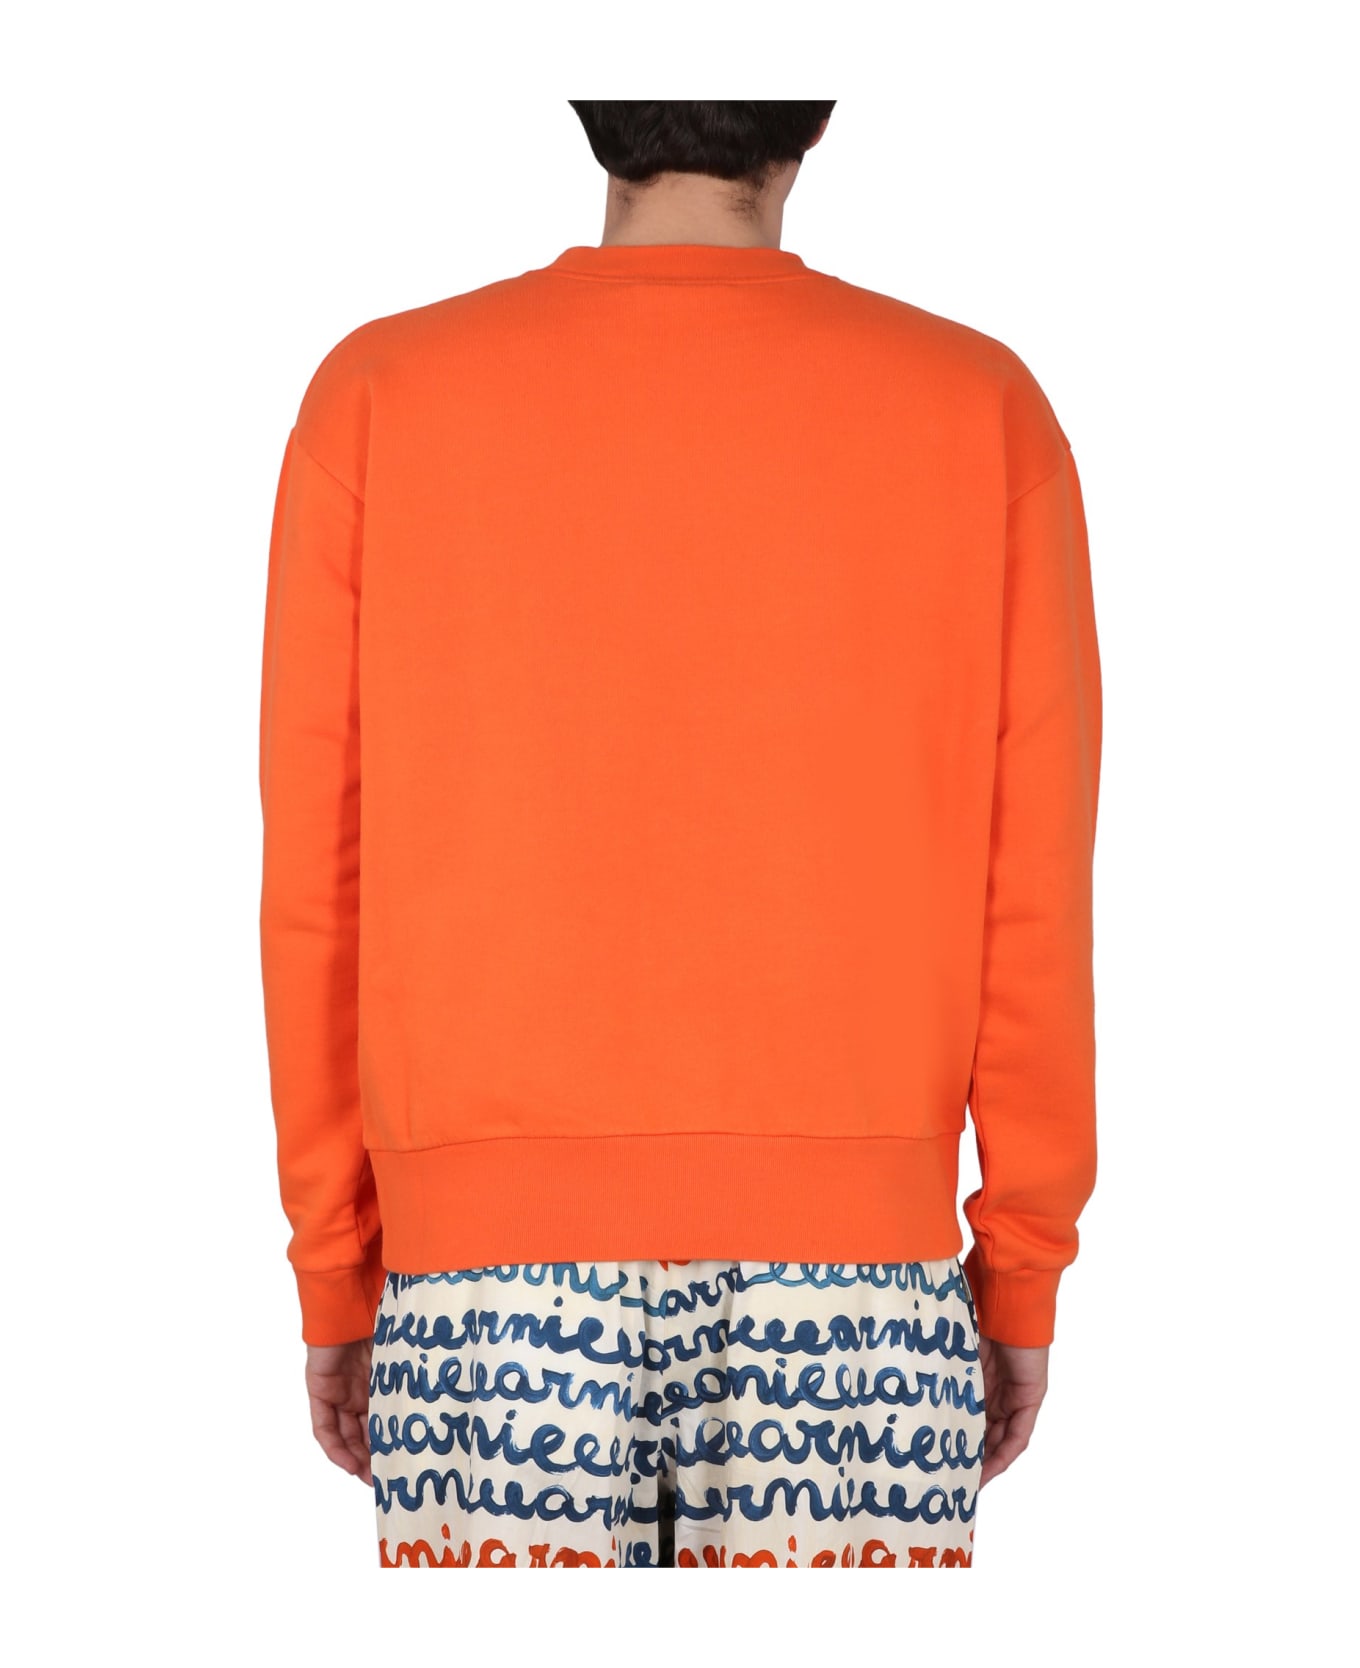 Marni Crewneck Sweatshirt - Orange フリース